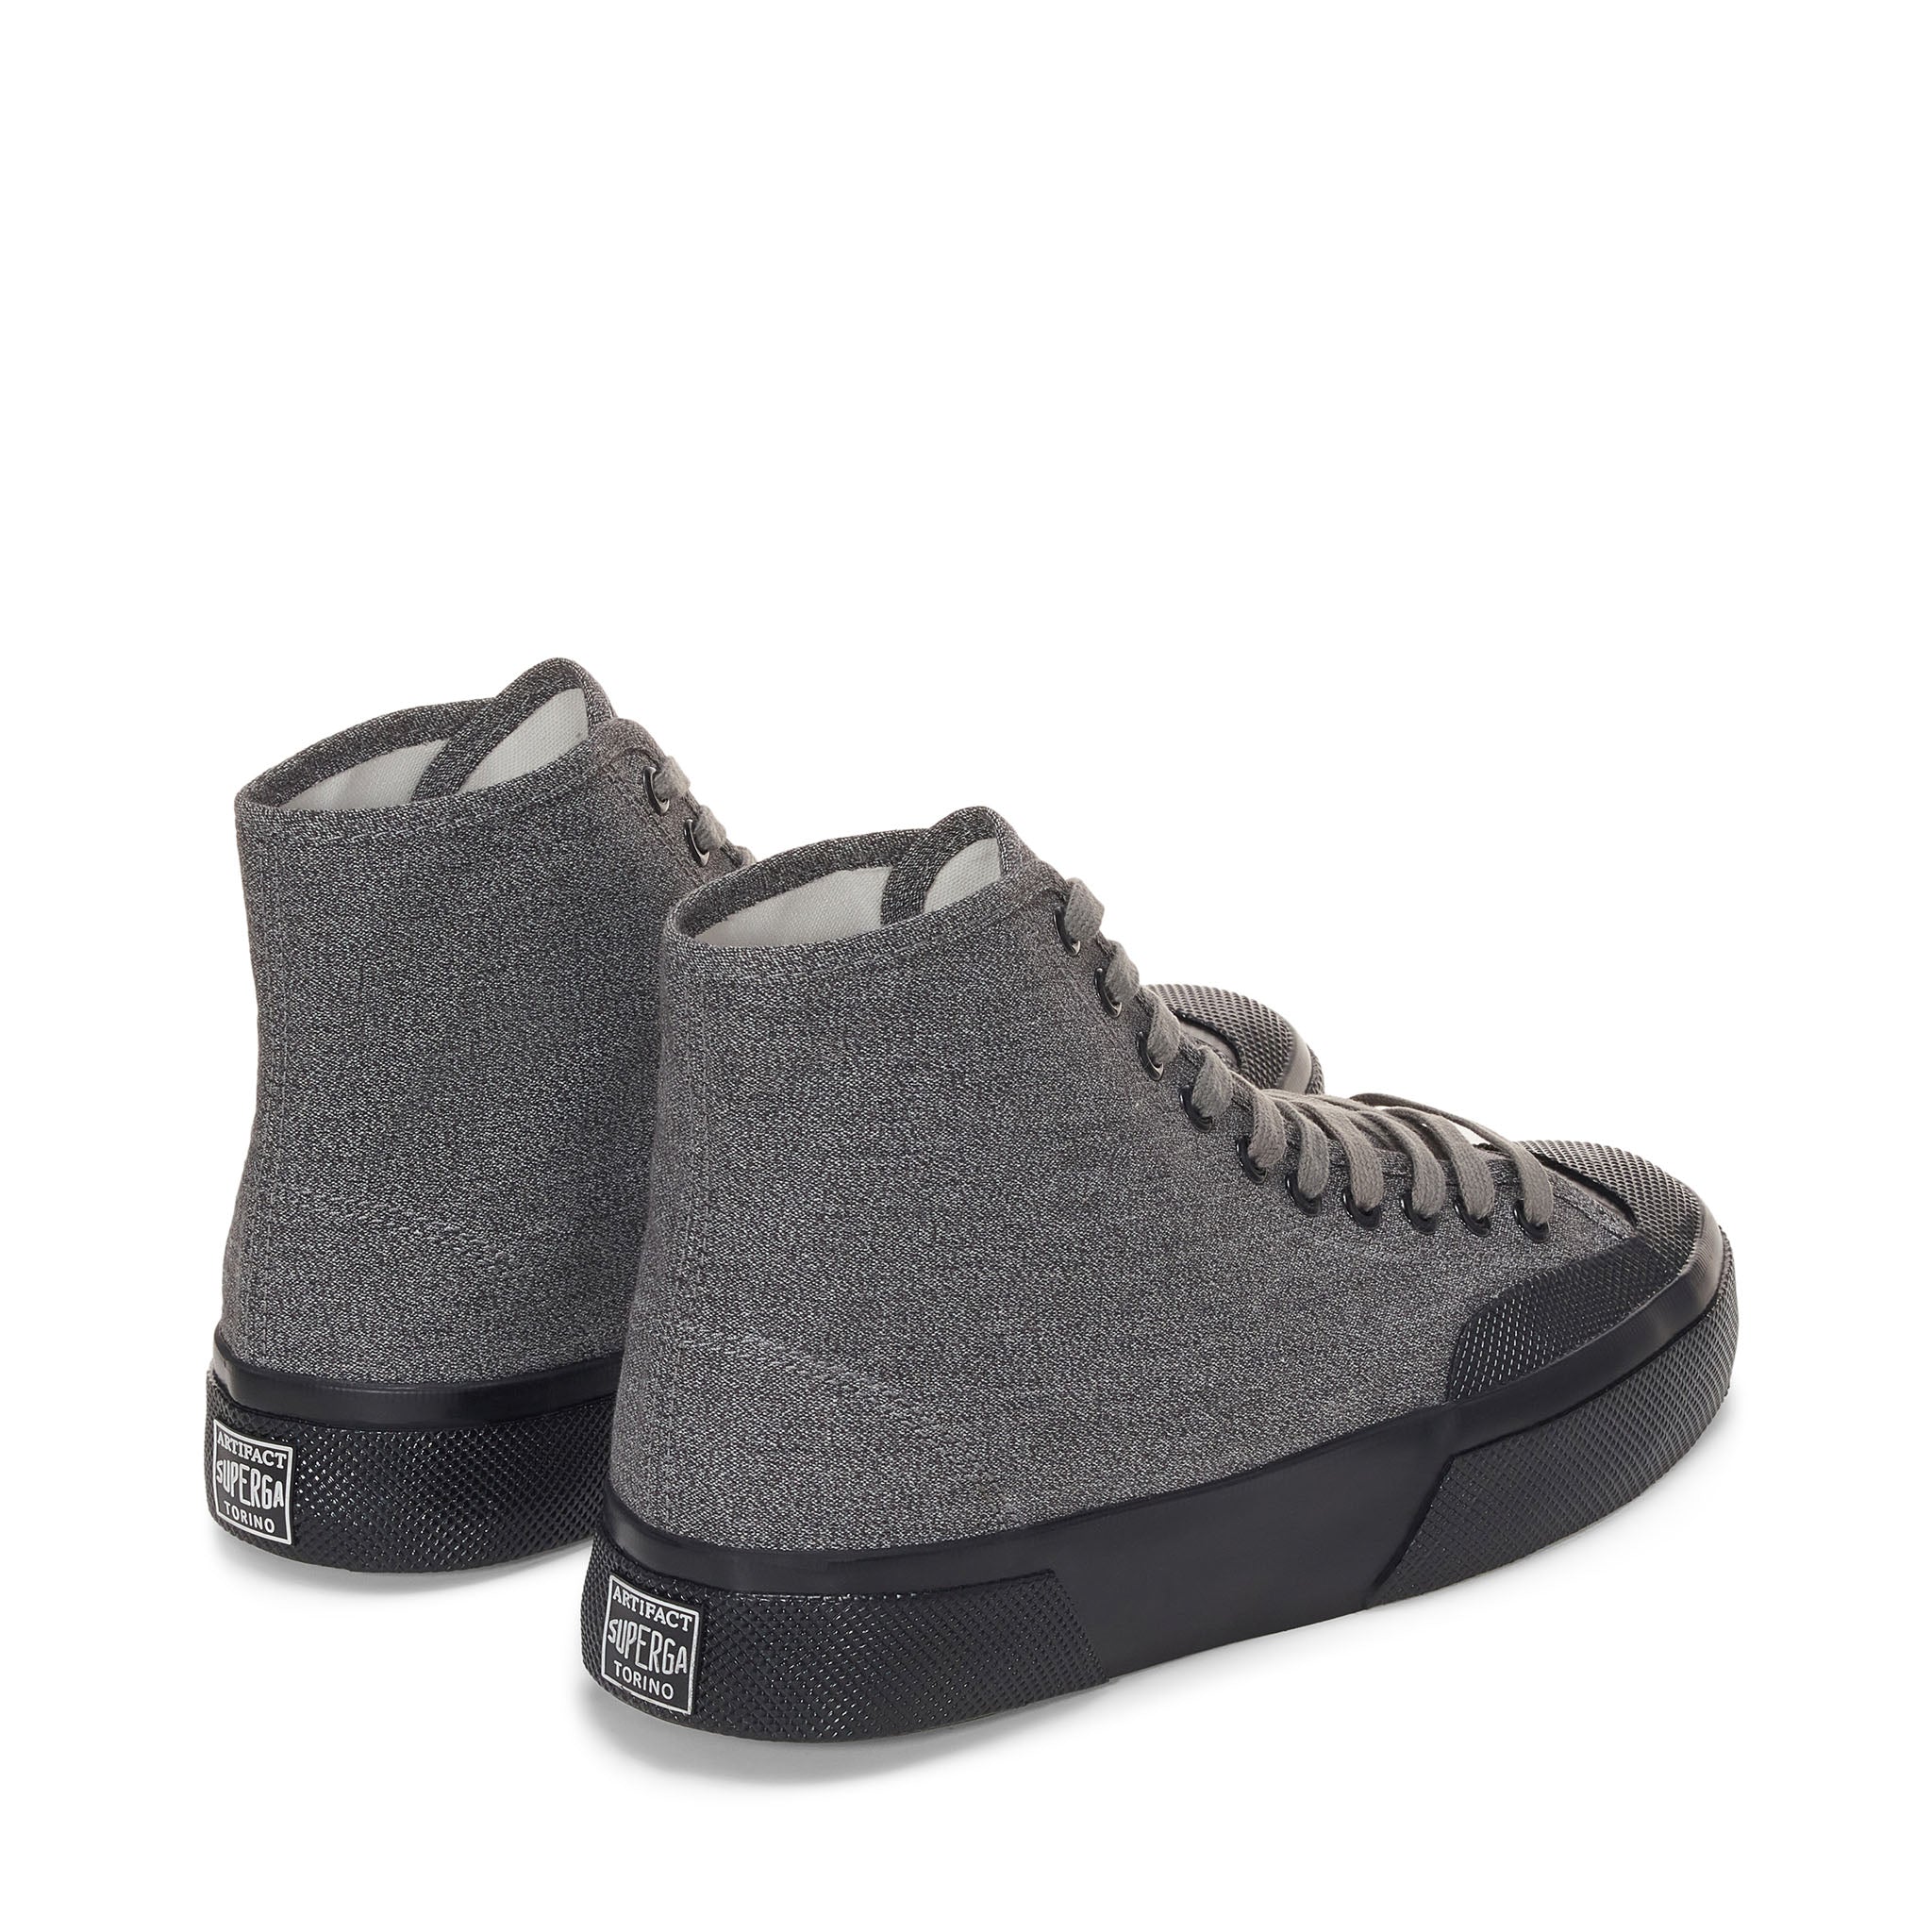 Superga 2433 Salt Pepper Sneakers - Grey Black. Back view